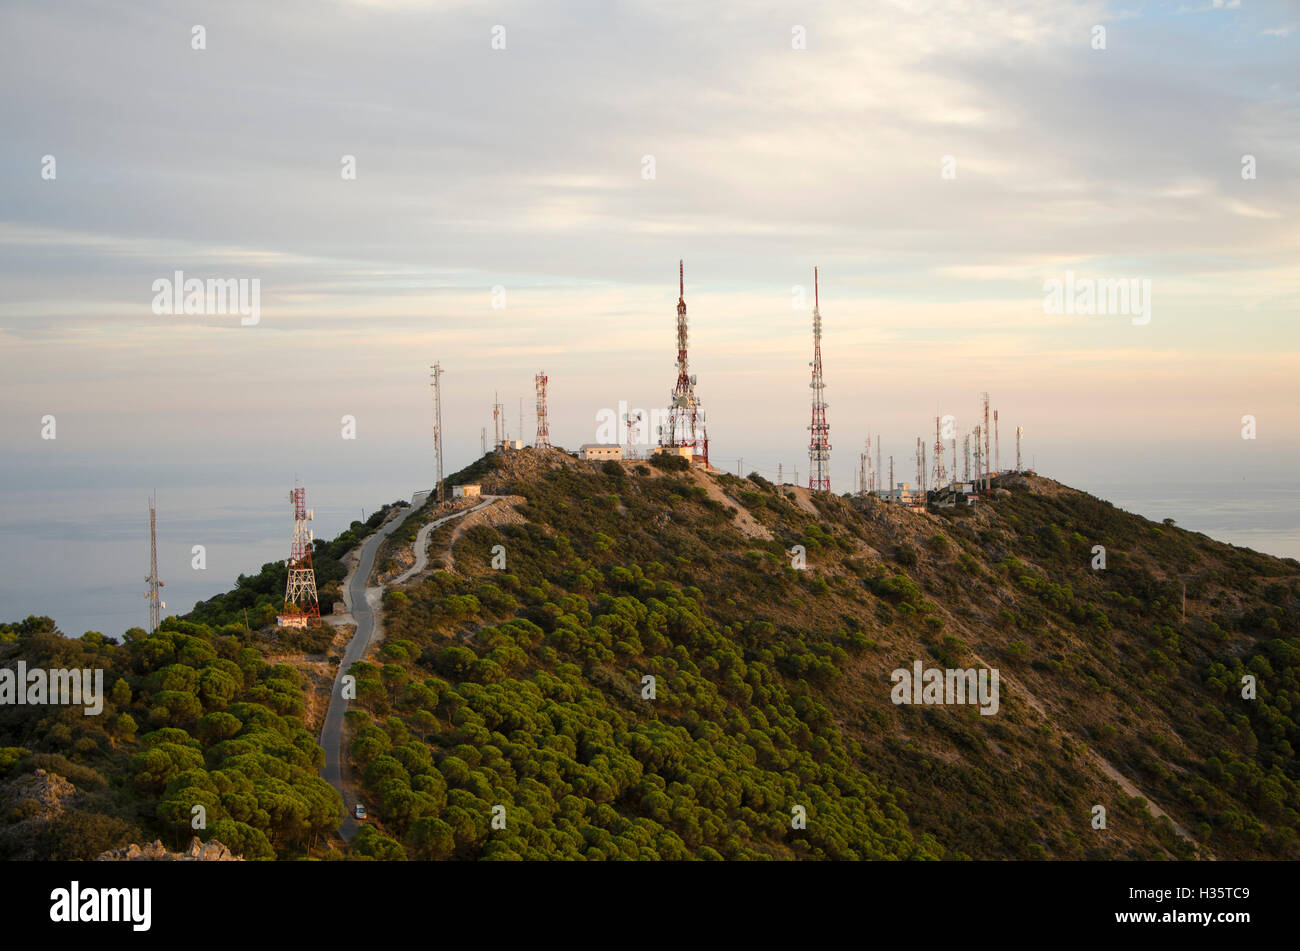 Kommunikation-Masten, Antennen, Antennen oben Mijas Costa Del Sol, Provinz Malaga, Spanien. Stockfoto